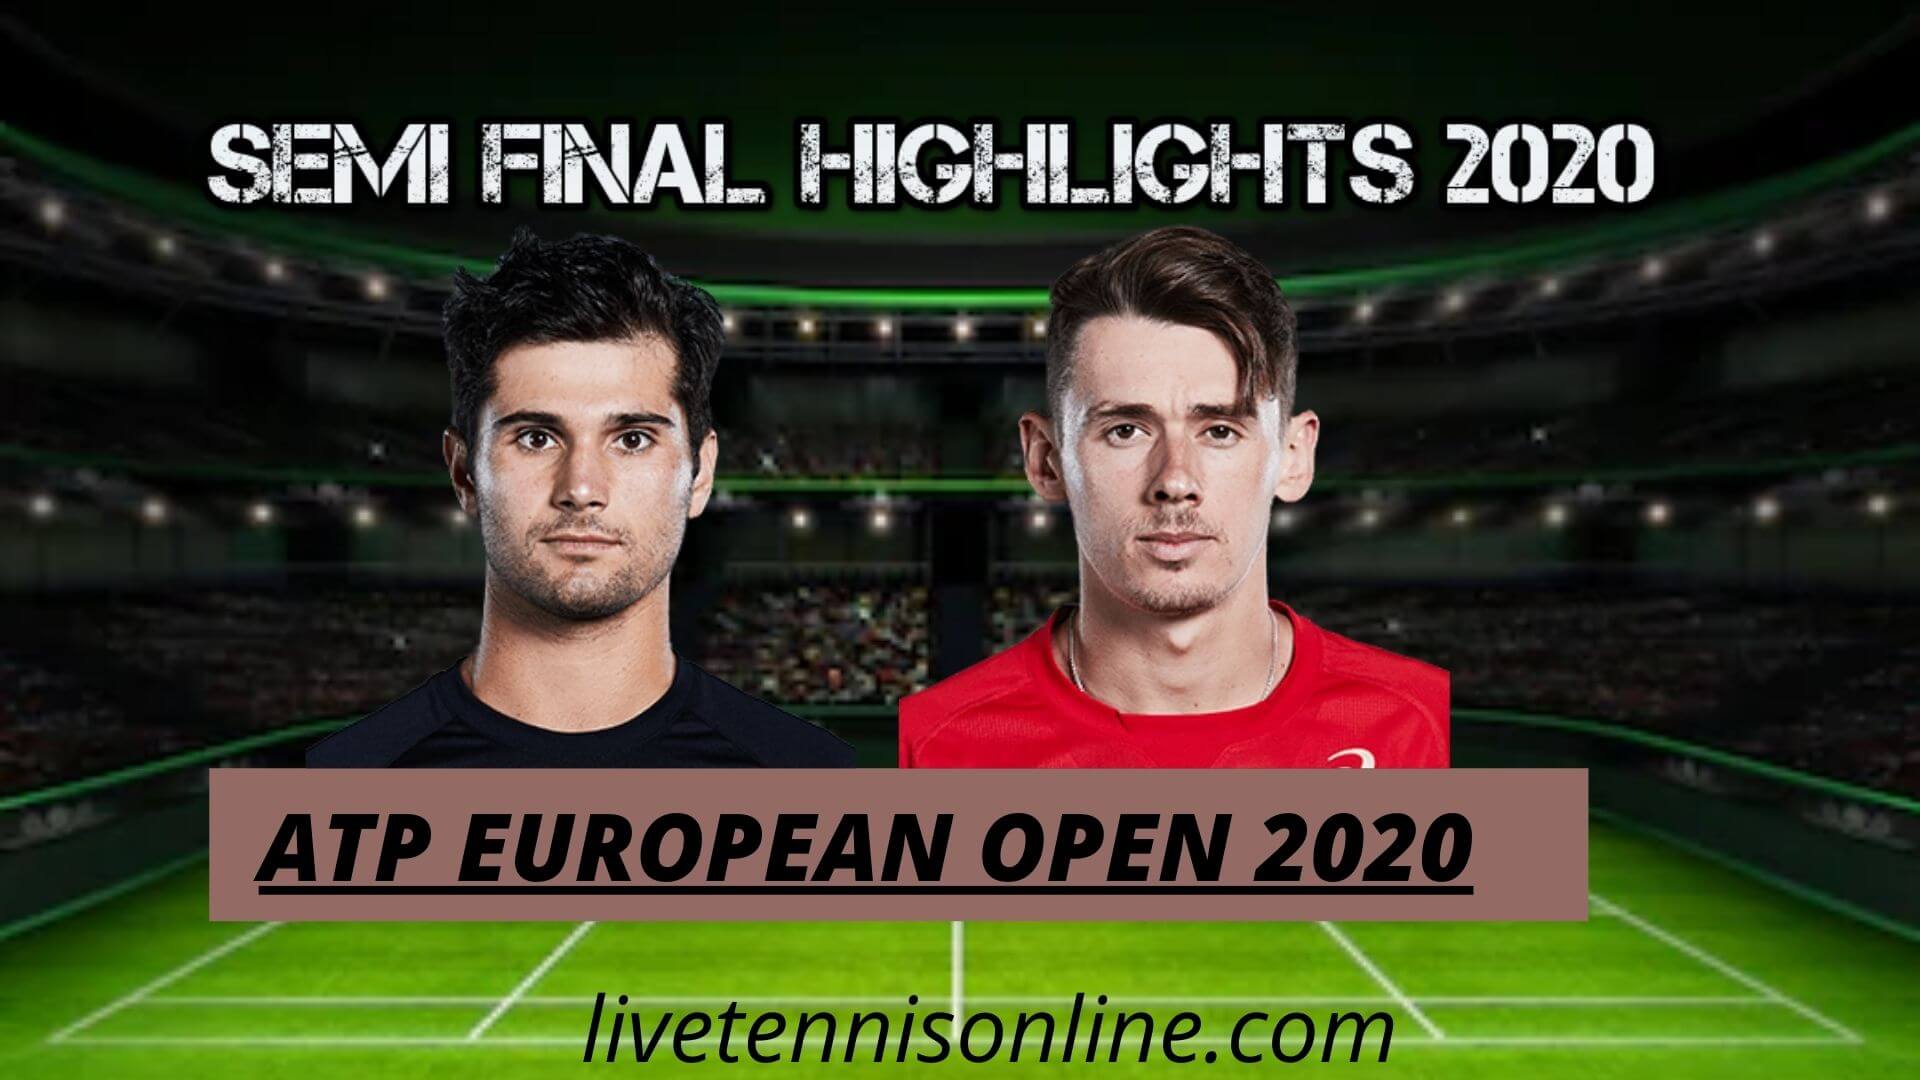 Giron vs De Minaur Quarterfinal Highlights 2020